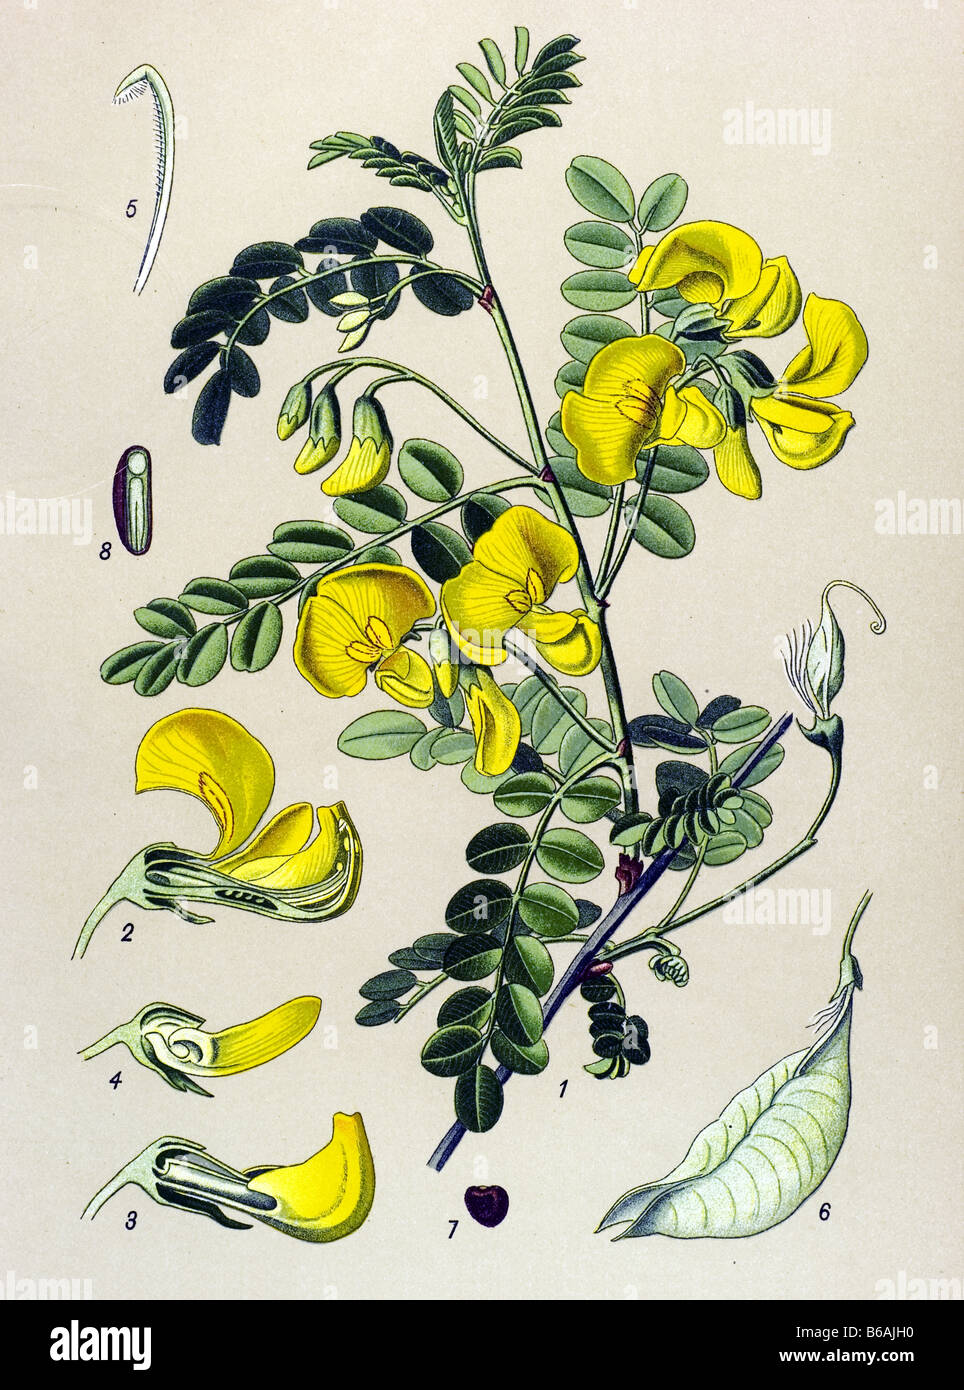 Bladder Senna, Colutea arborescens poisonous plants illustrations Stock Photo